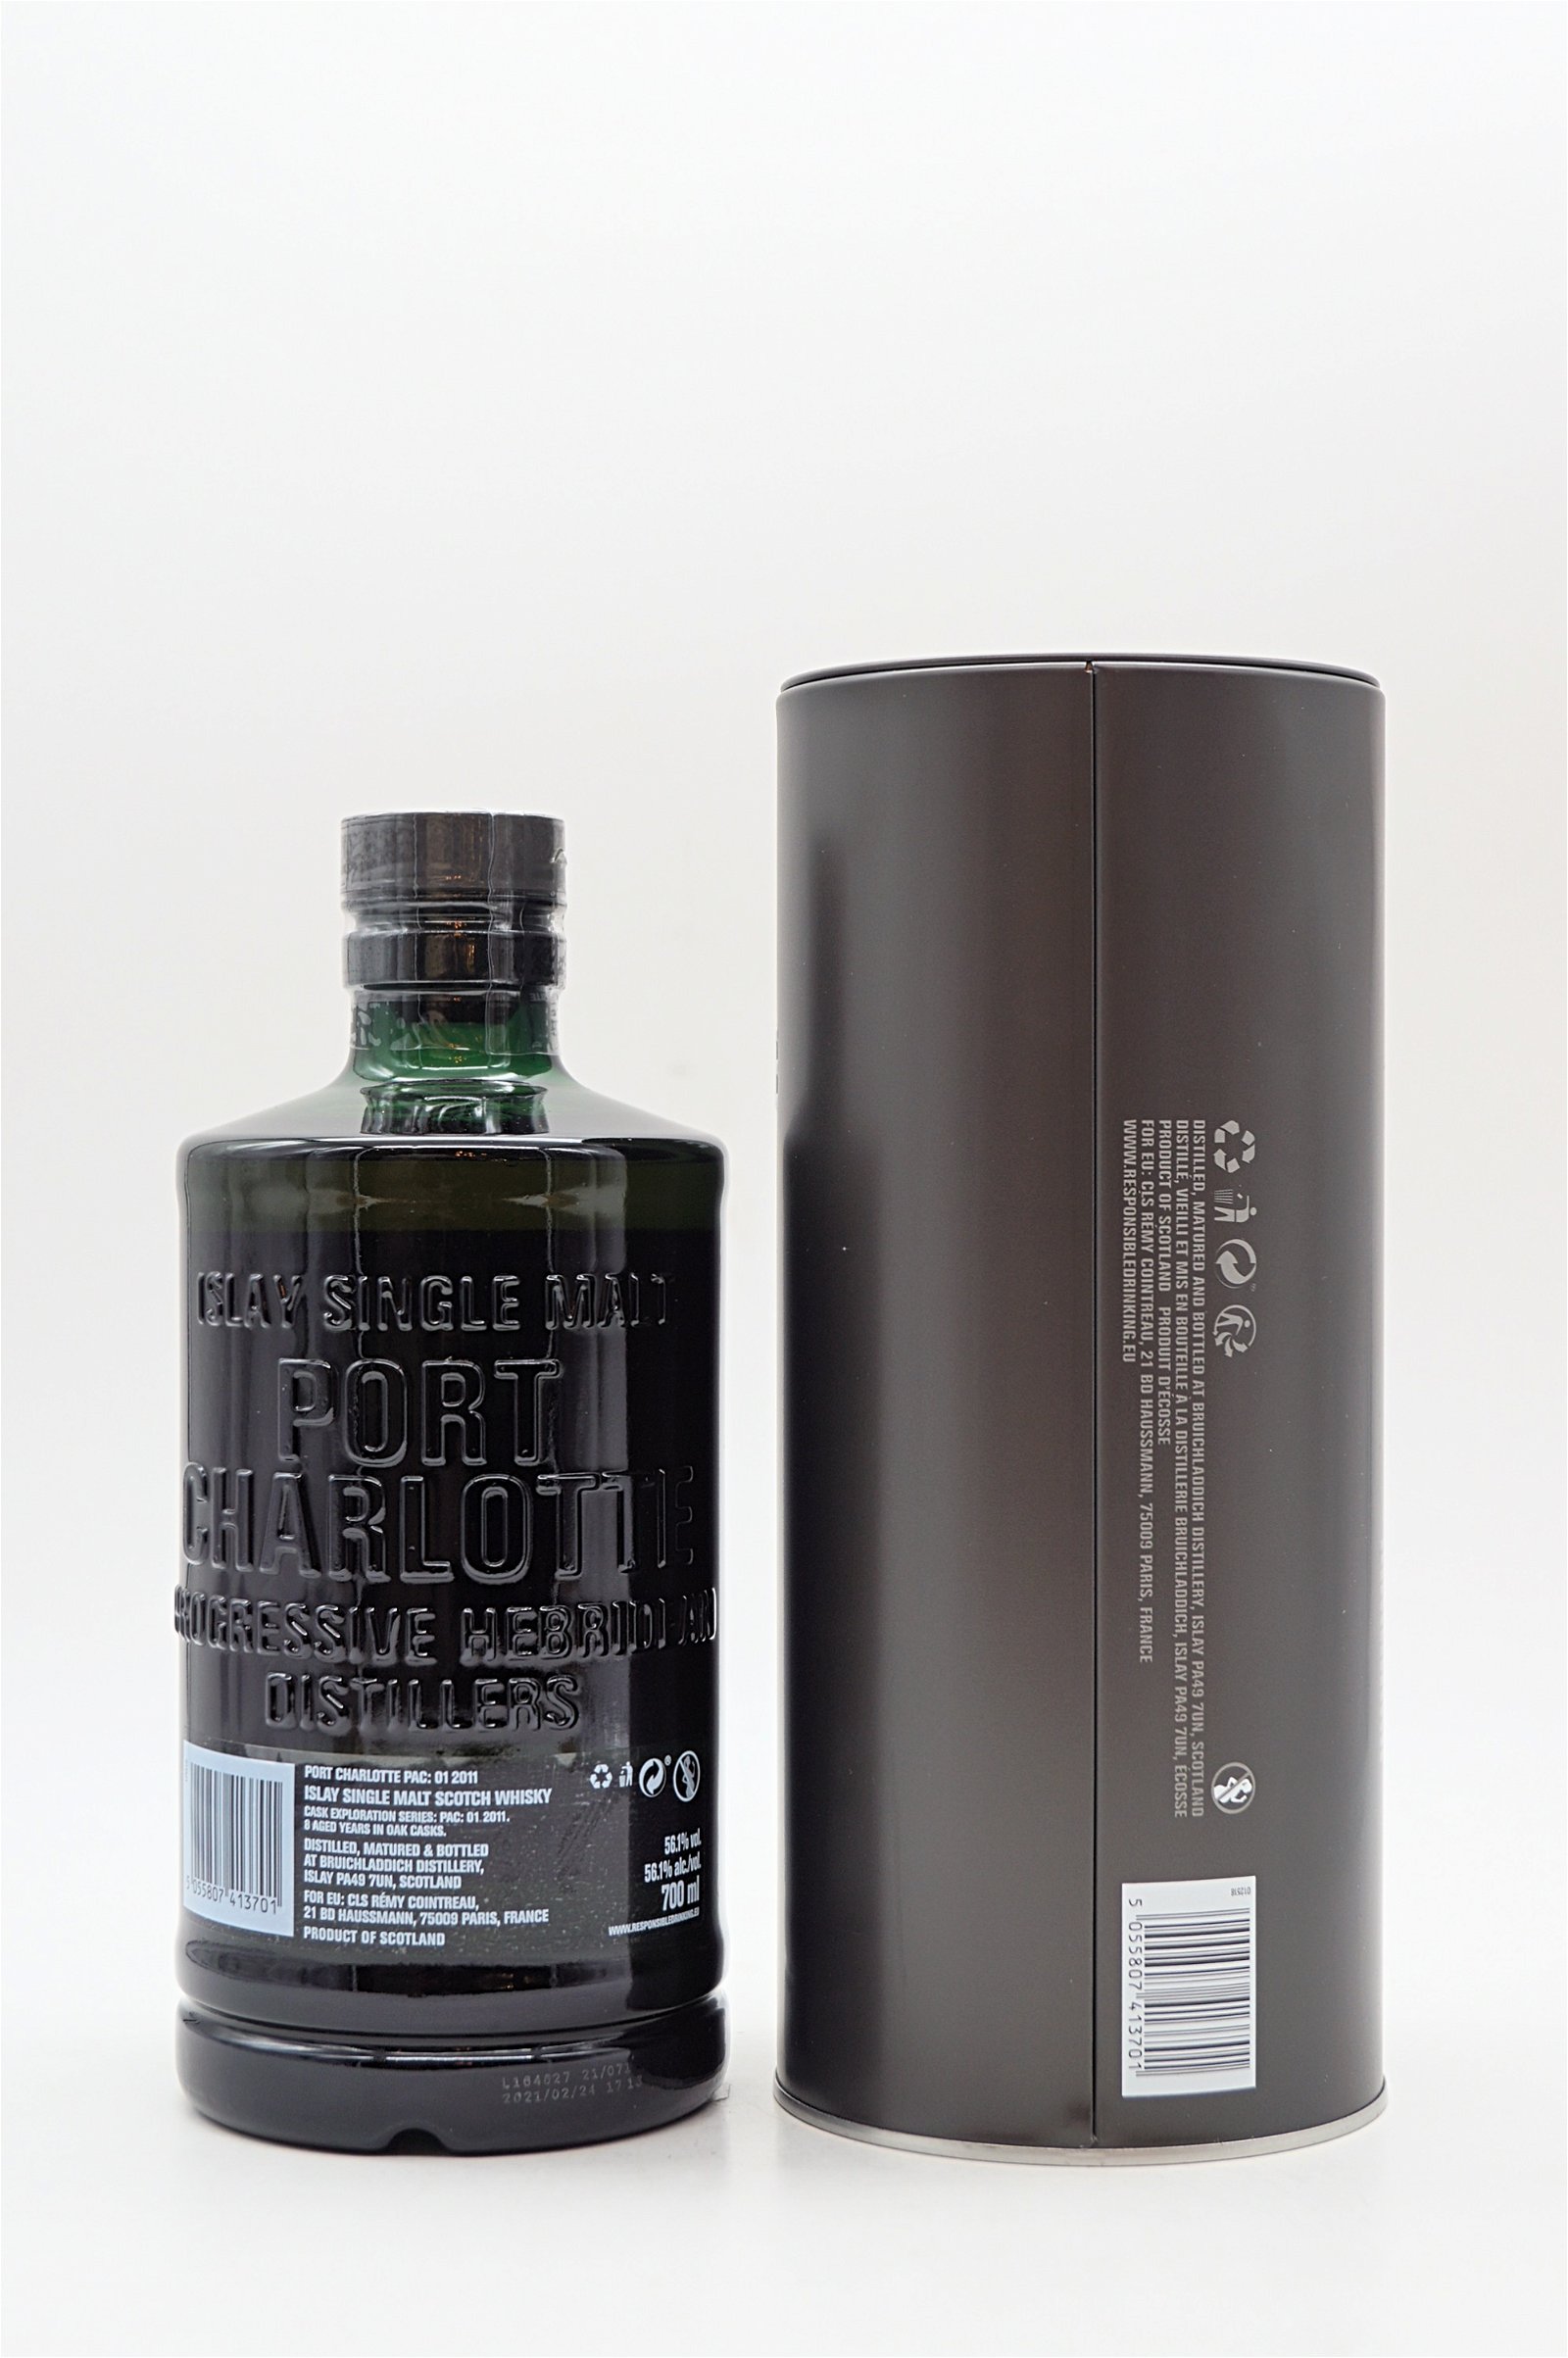 Bruichladdich Port Chalotte PAC: 01 2011 Heavily Peated Islay Single Malt Scotch Whisky